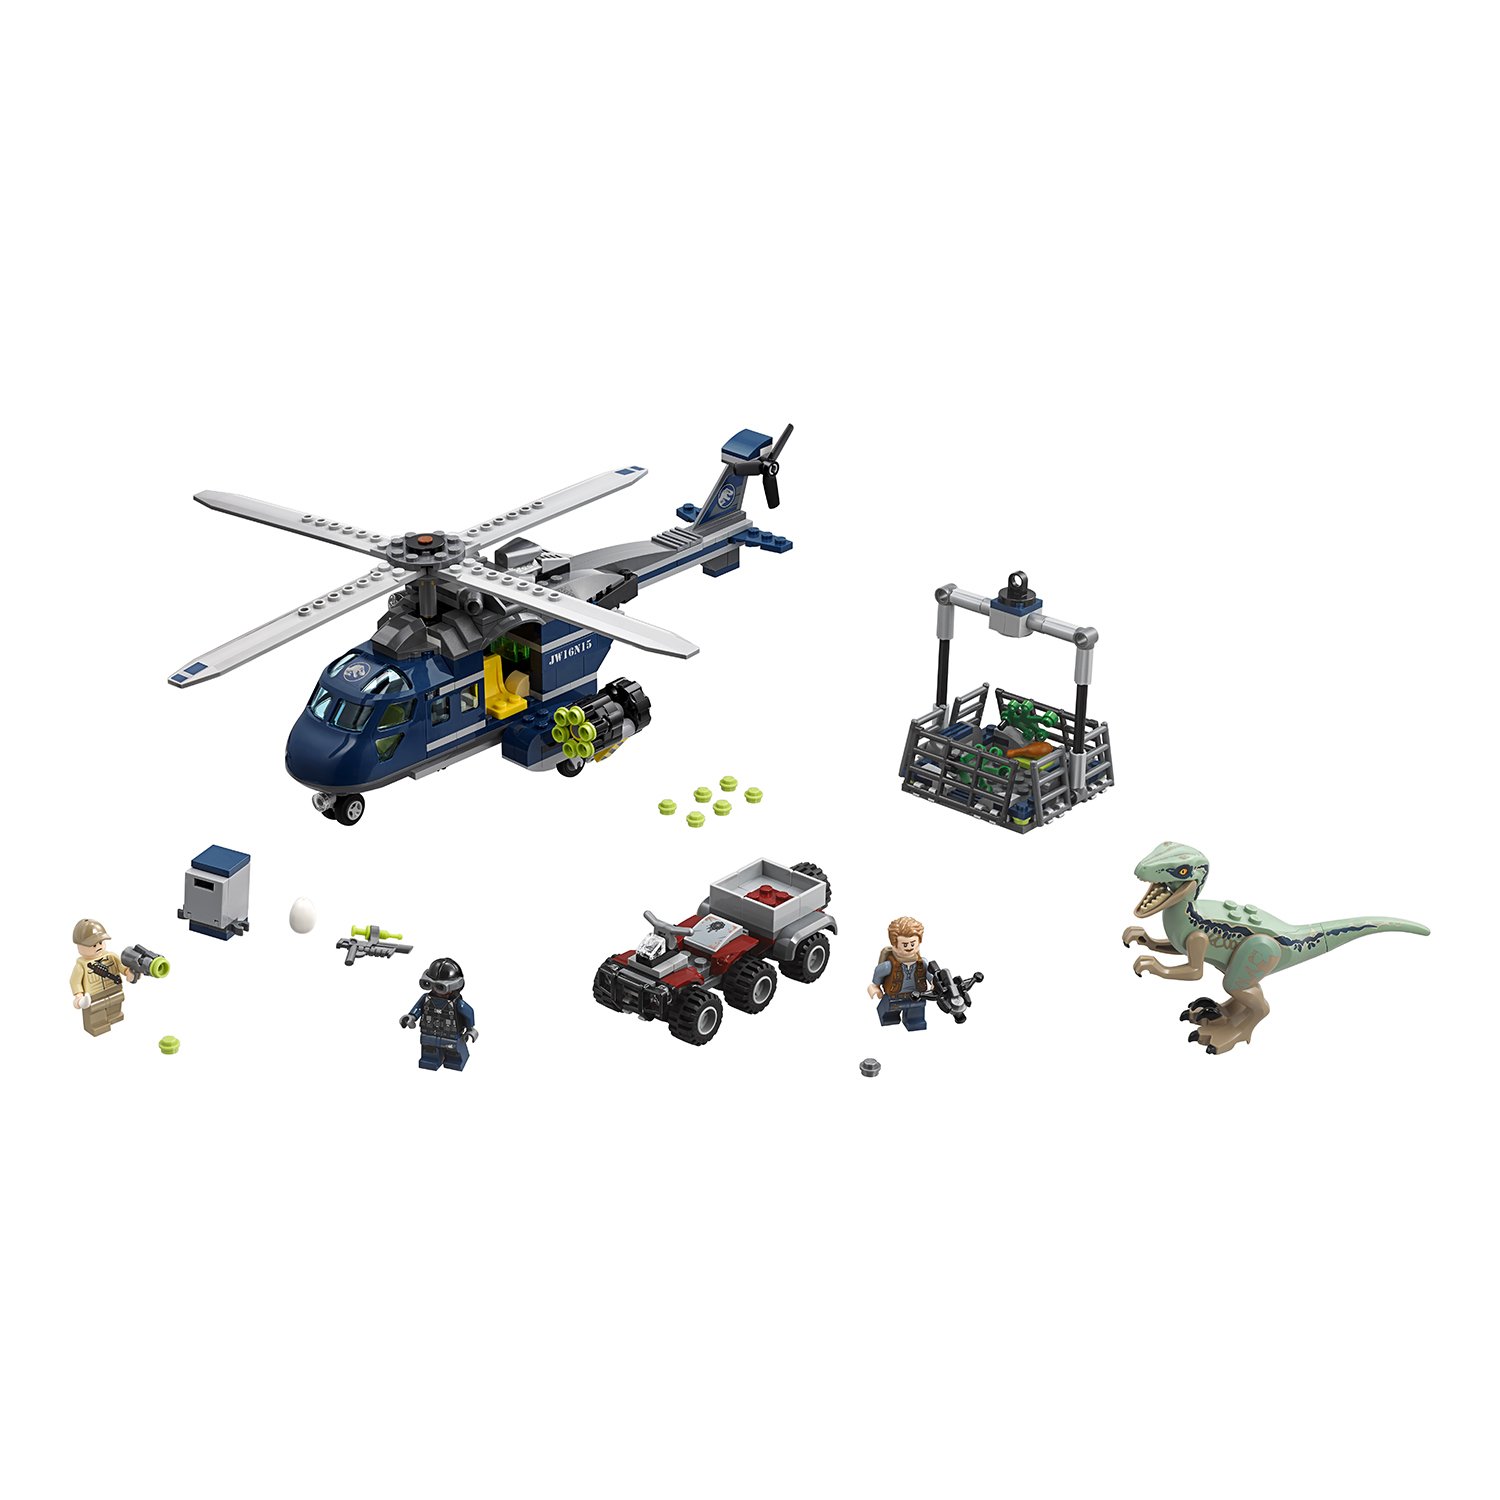 Конструктор LEGO Jurassic World «Погоня за Блю на вертолёте» 75928, 397 деталей